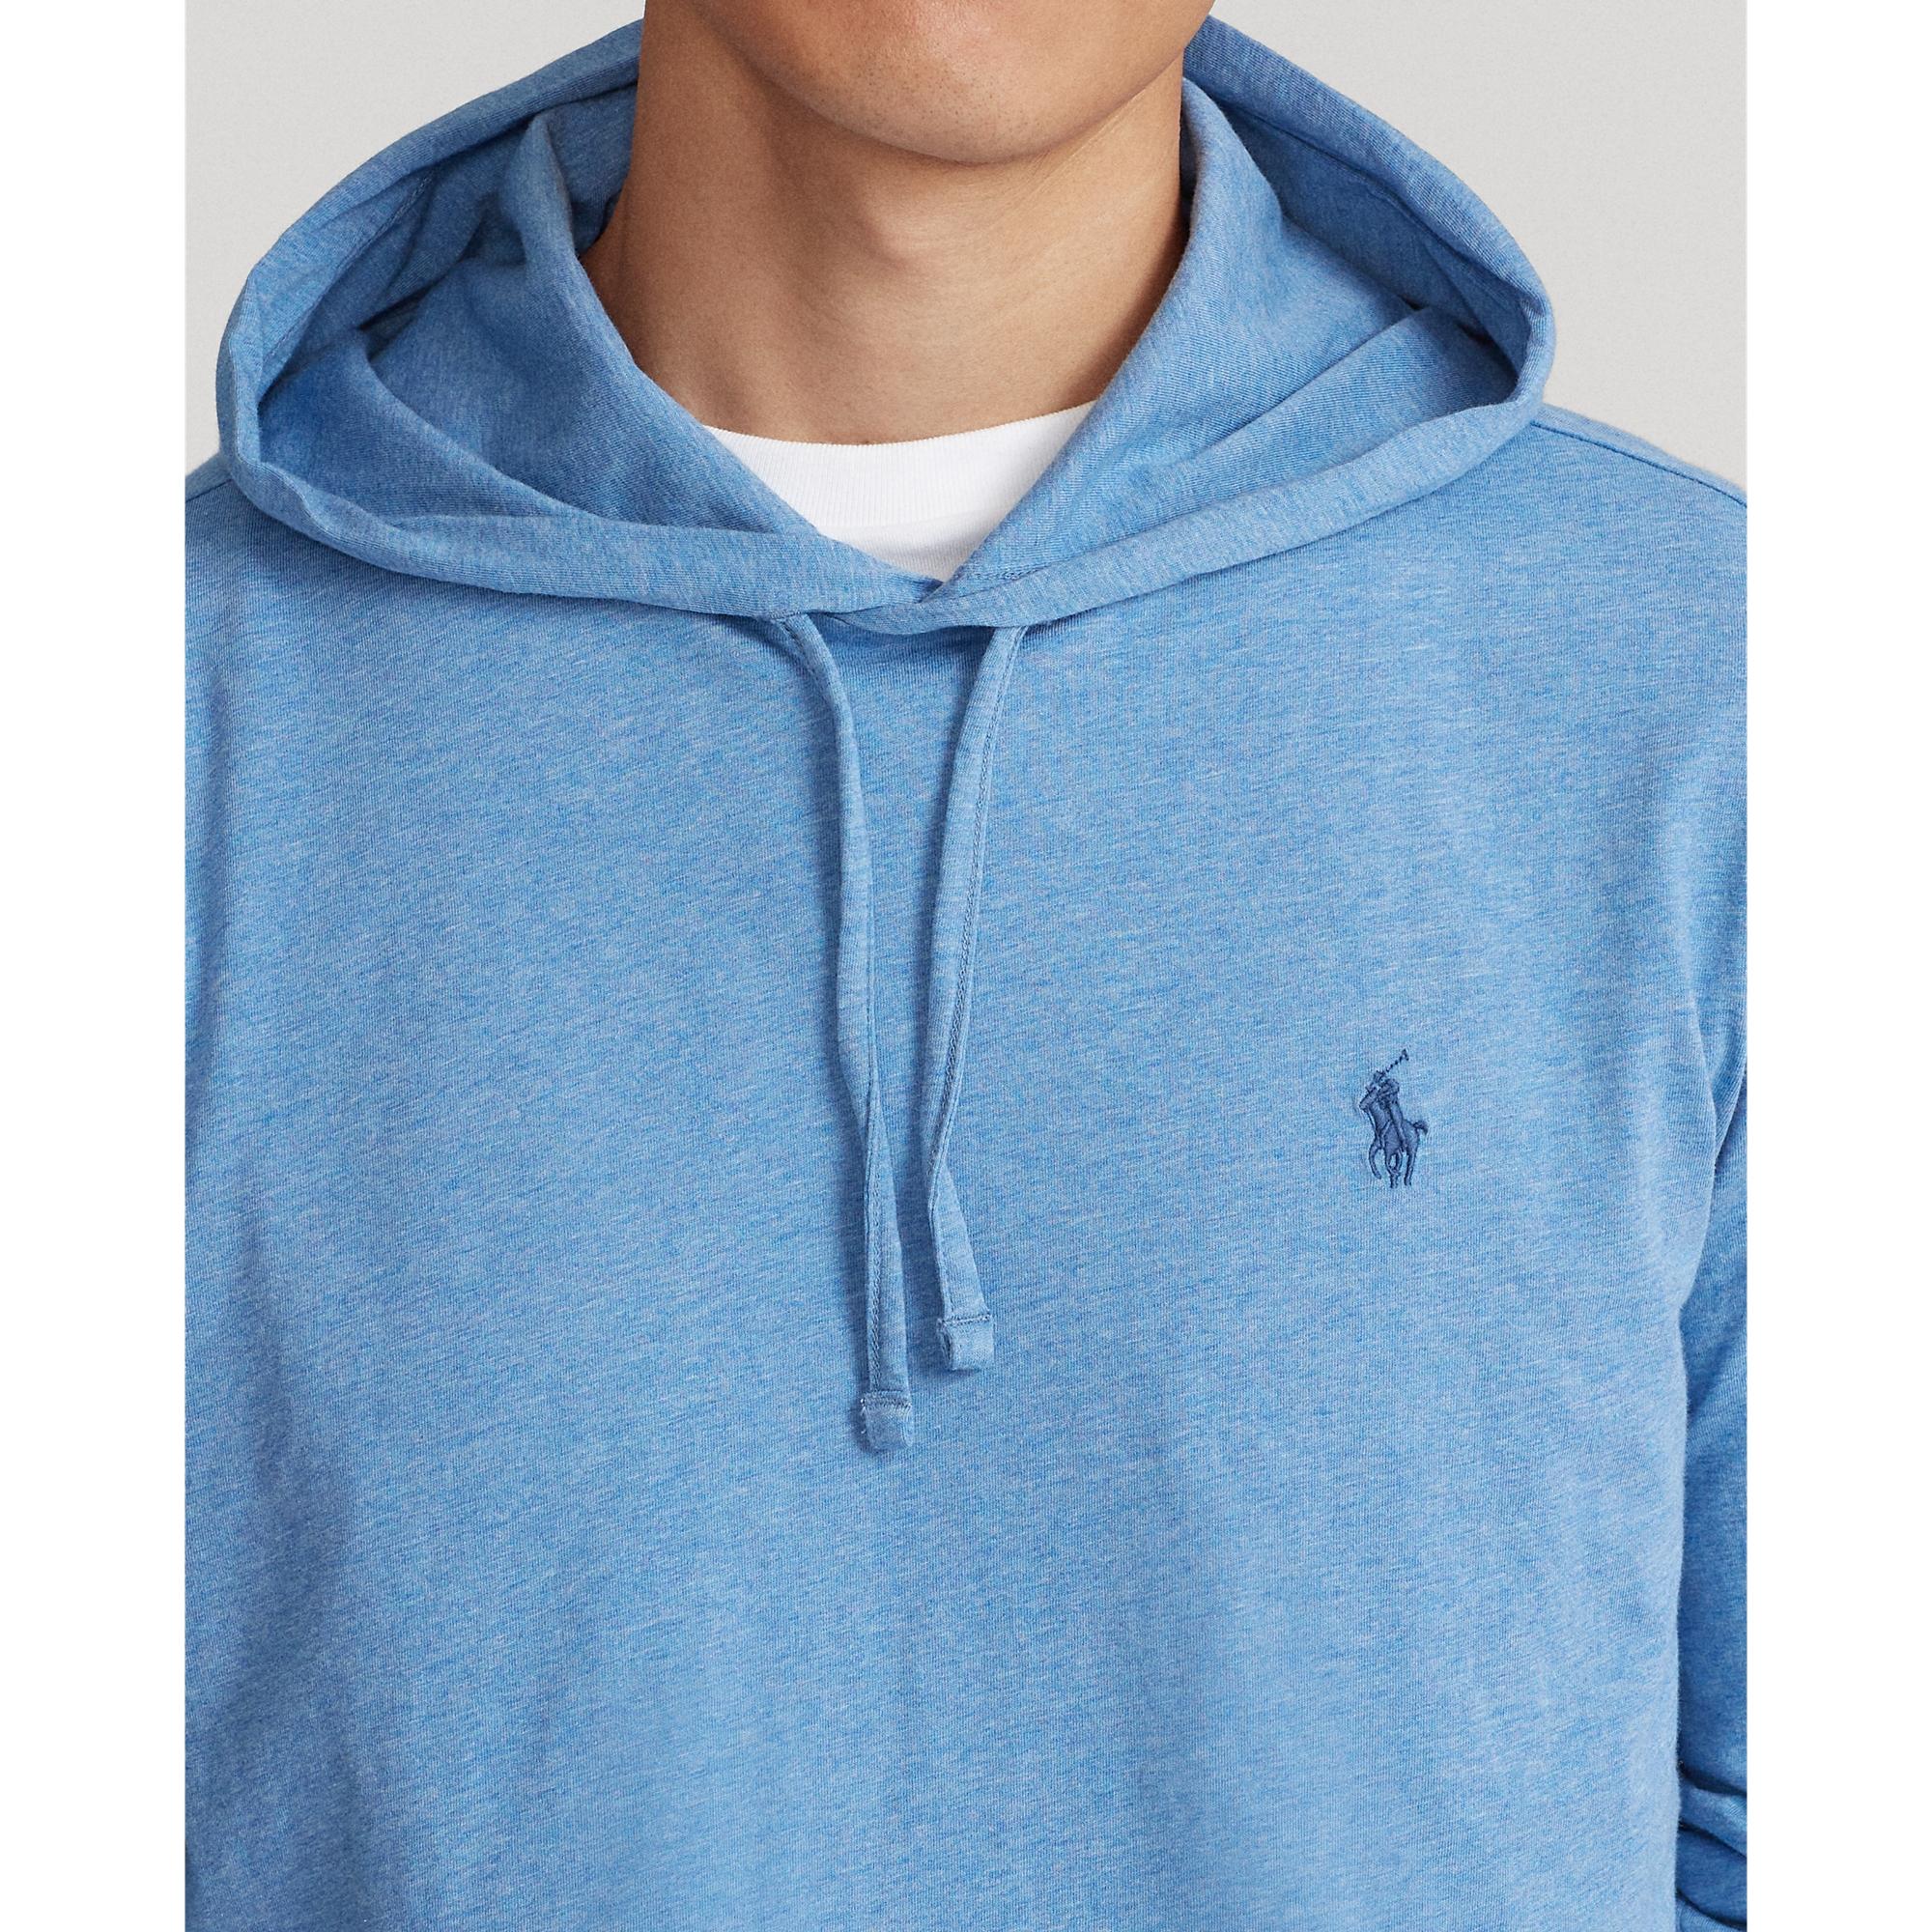 Ralph Lauren Jersey Hooded T-shirt in Blue for Men - Save 15% - Lyst